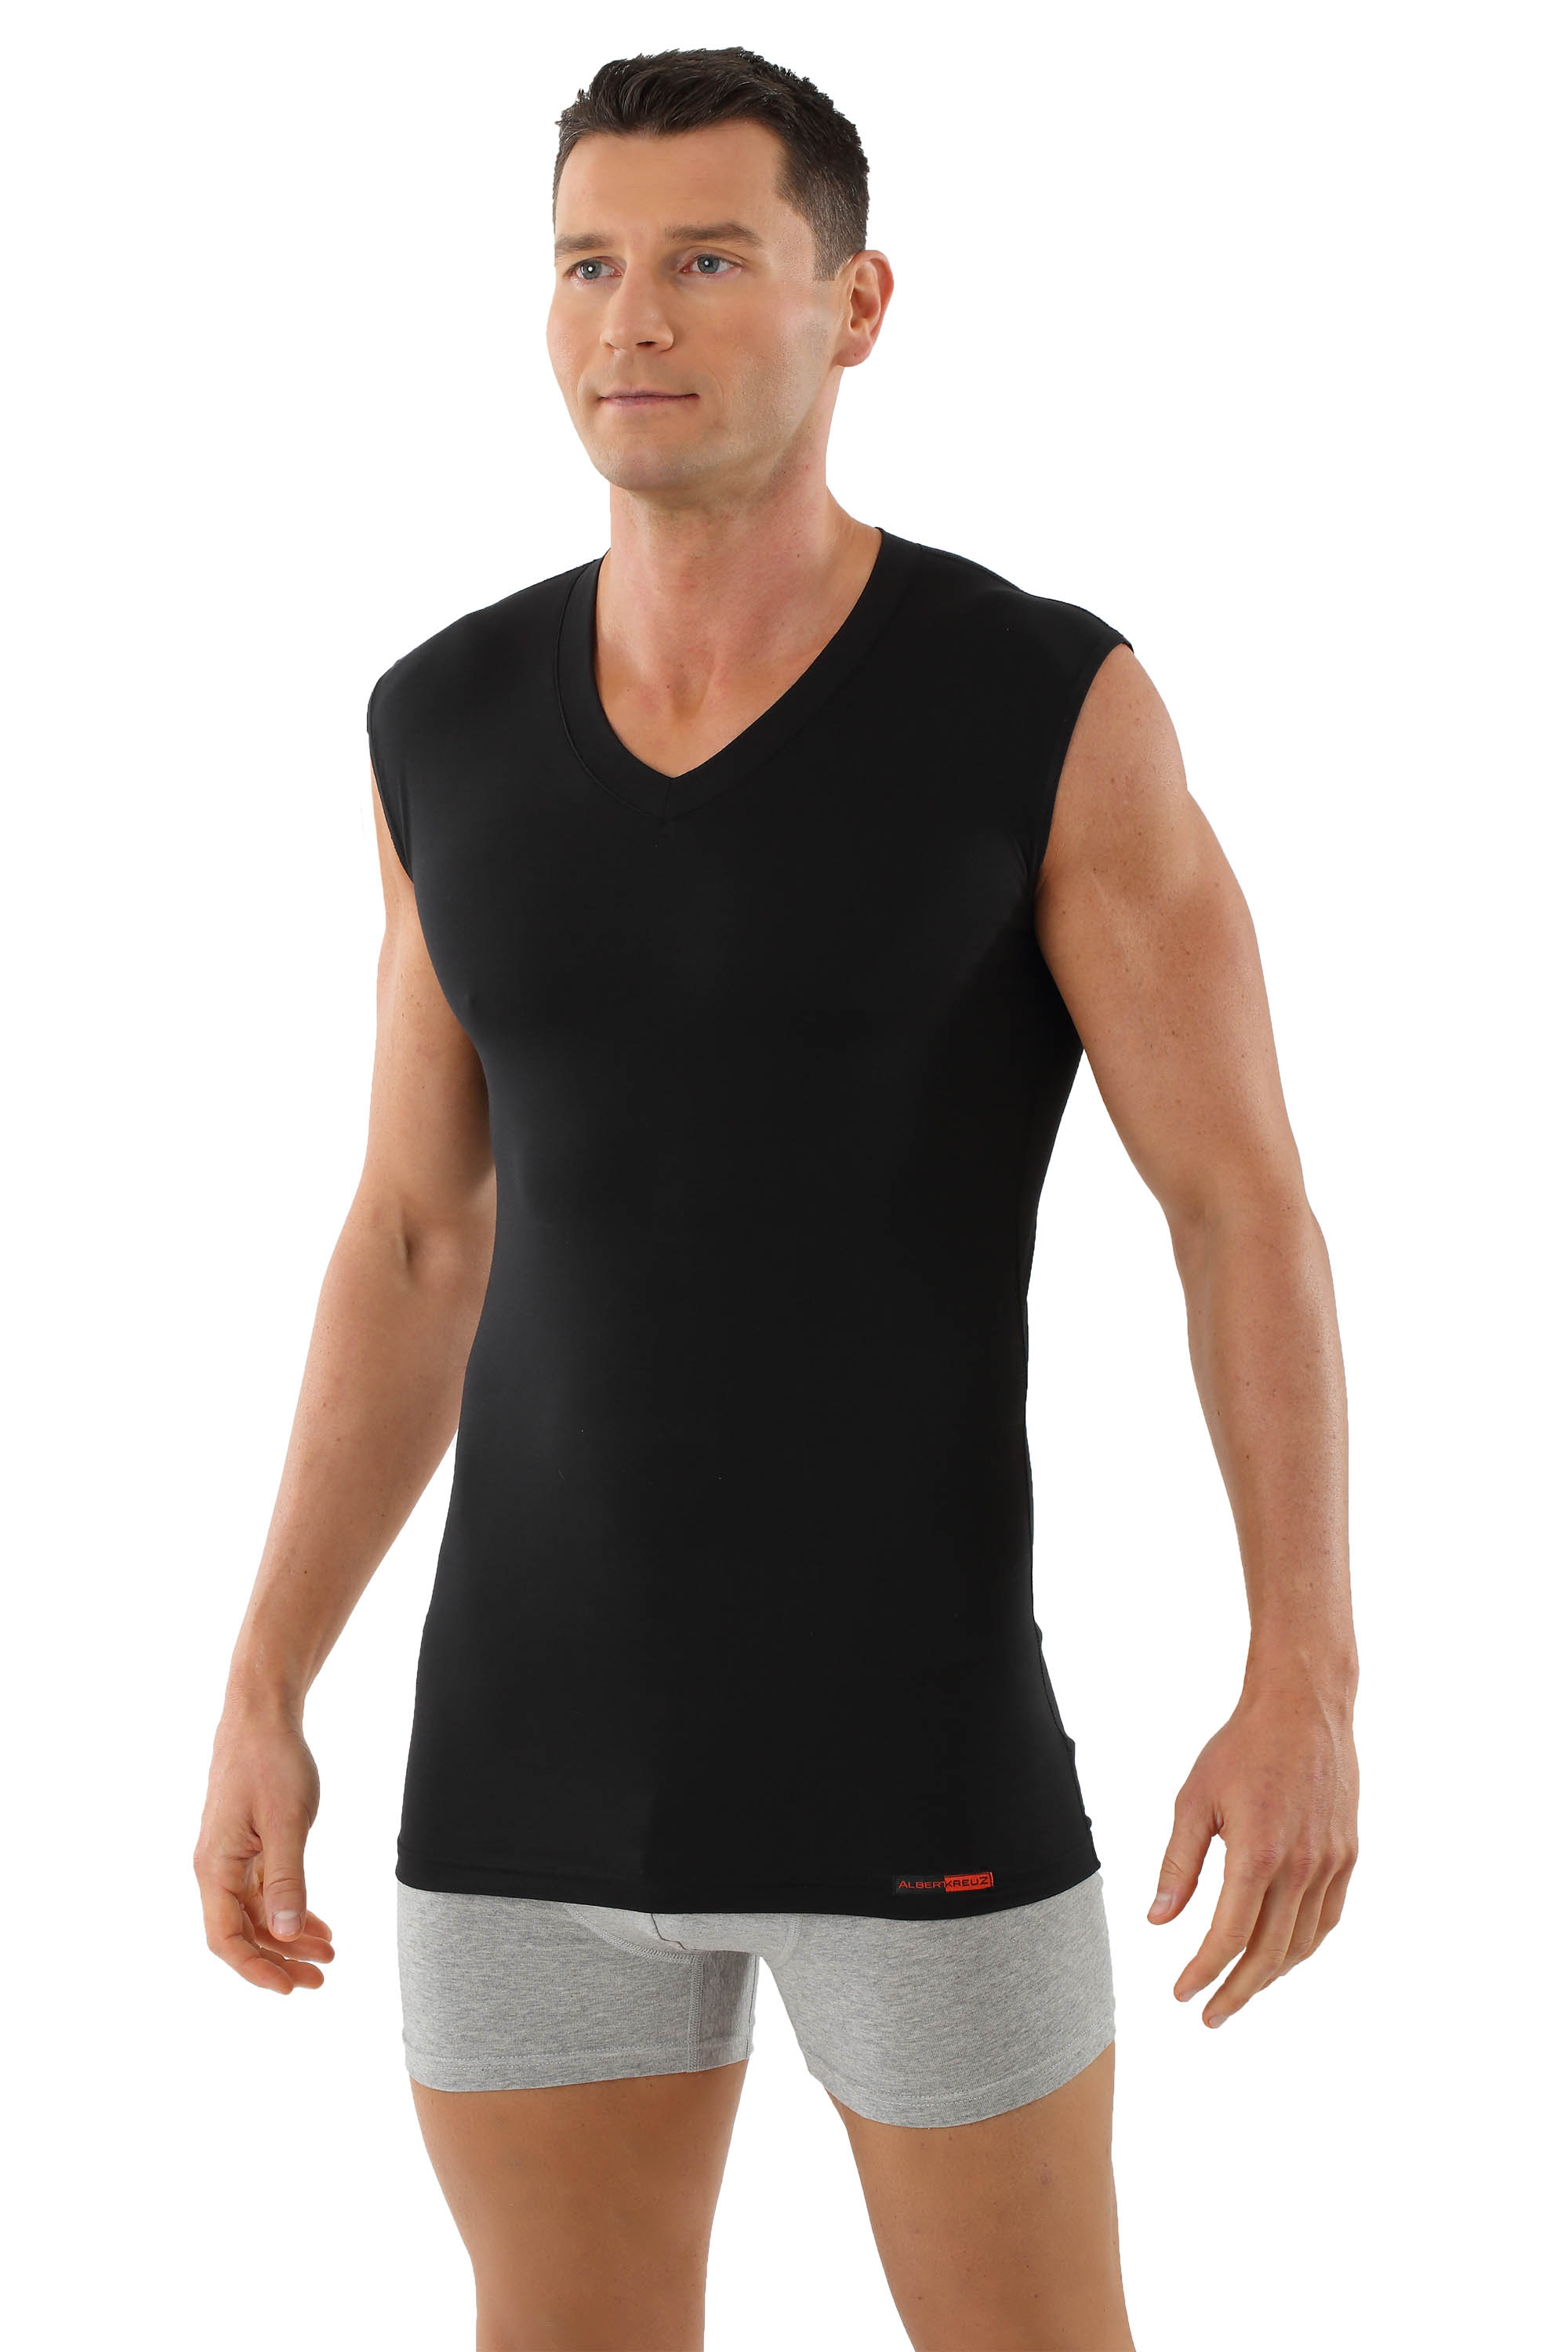 Albert Kreuz Men/’s Business Sleeveless V-Neck Undershirt Made of Soft and Light Stretch-Cotton Black